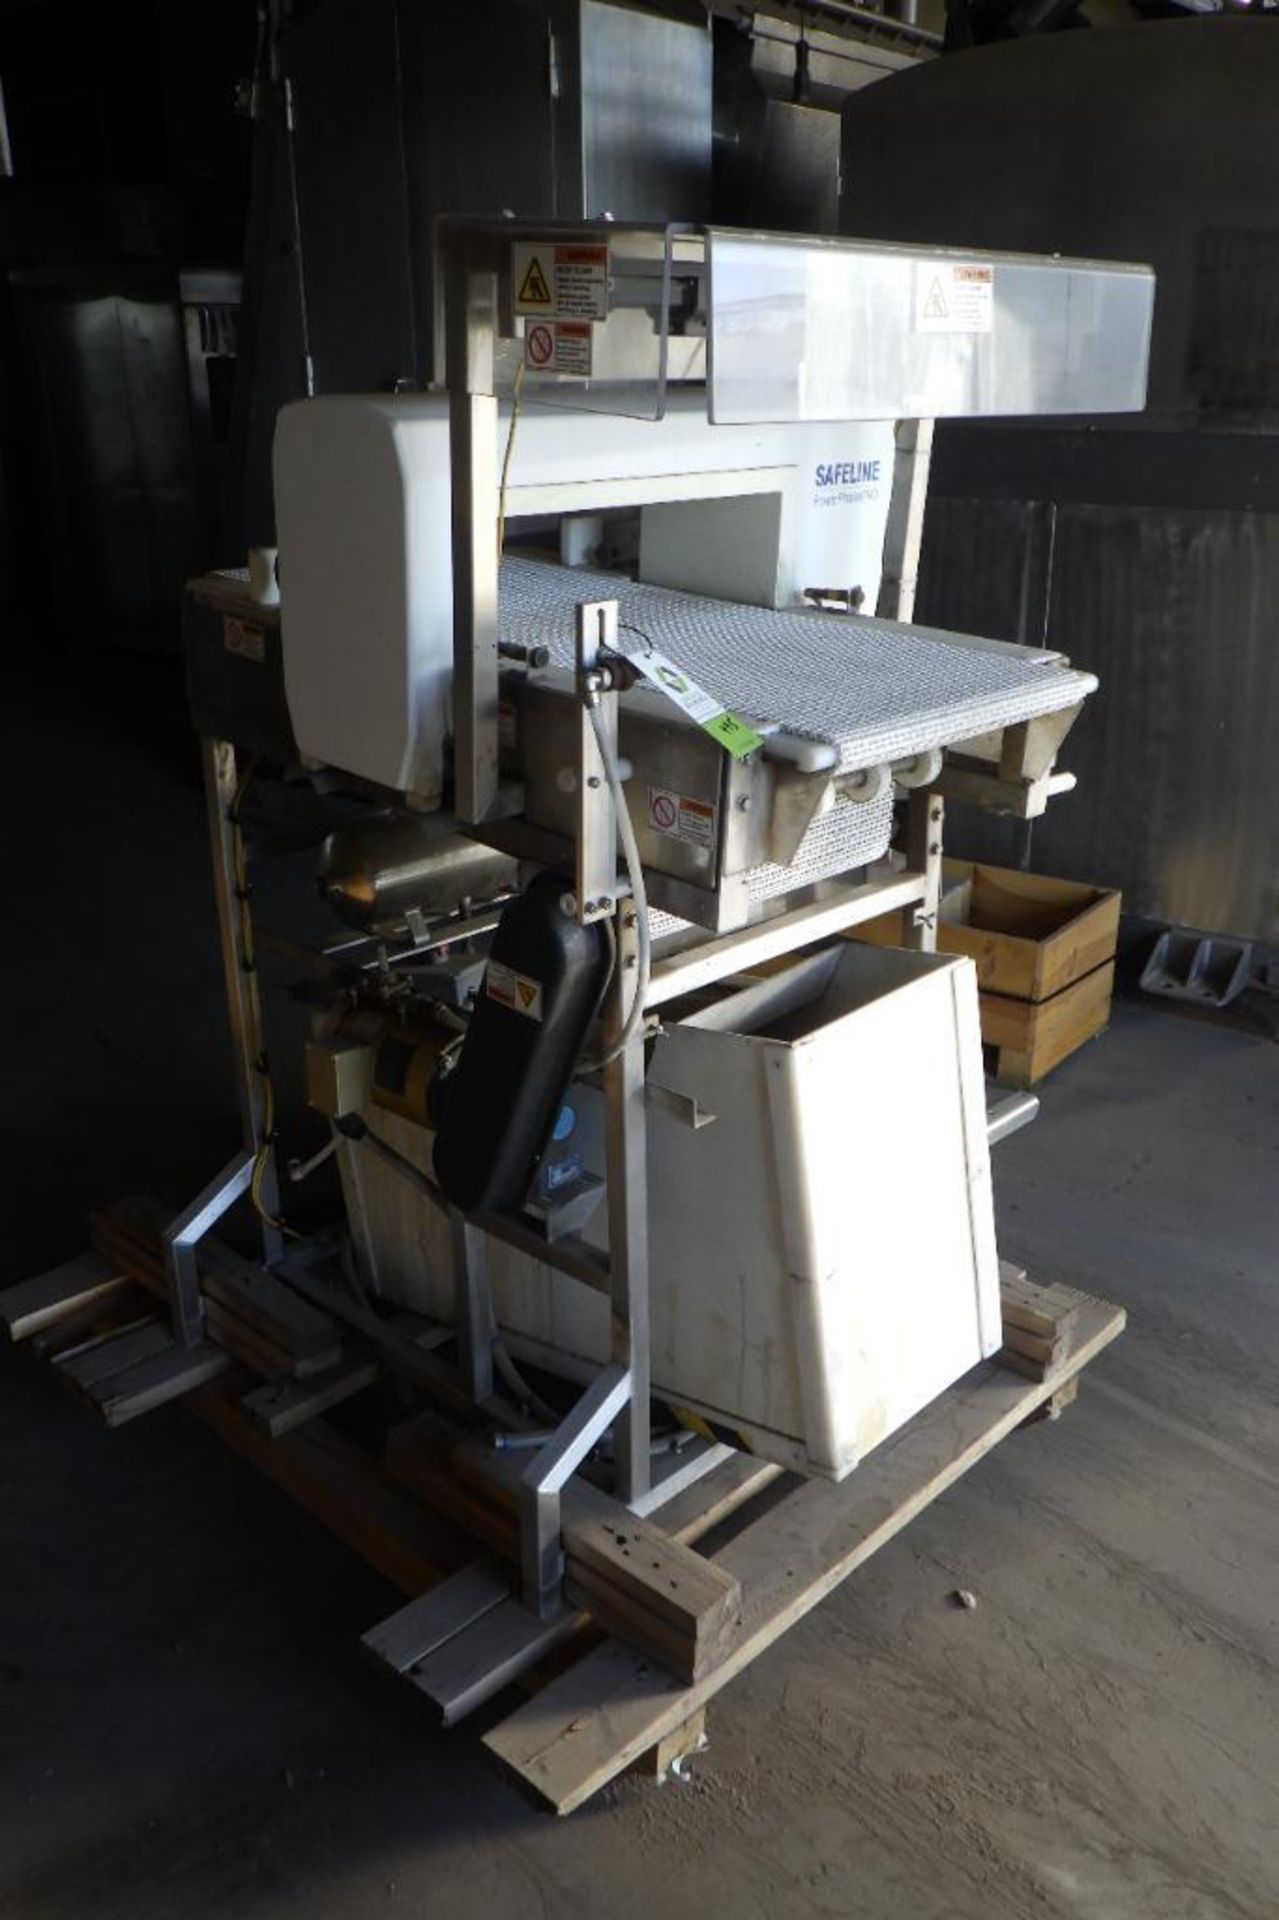 Safeline metal detector with conveyor - Image 4 of 16